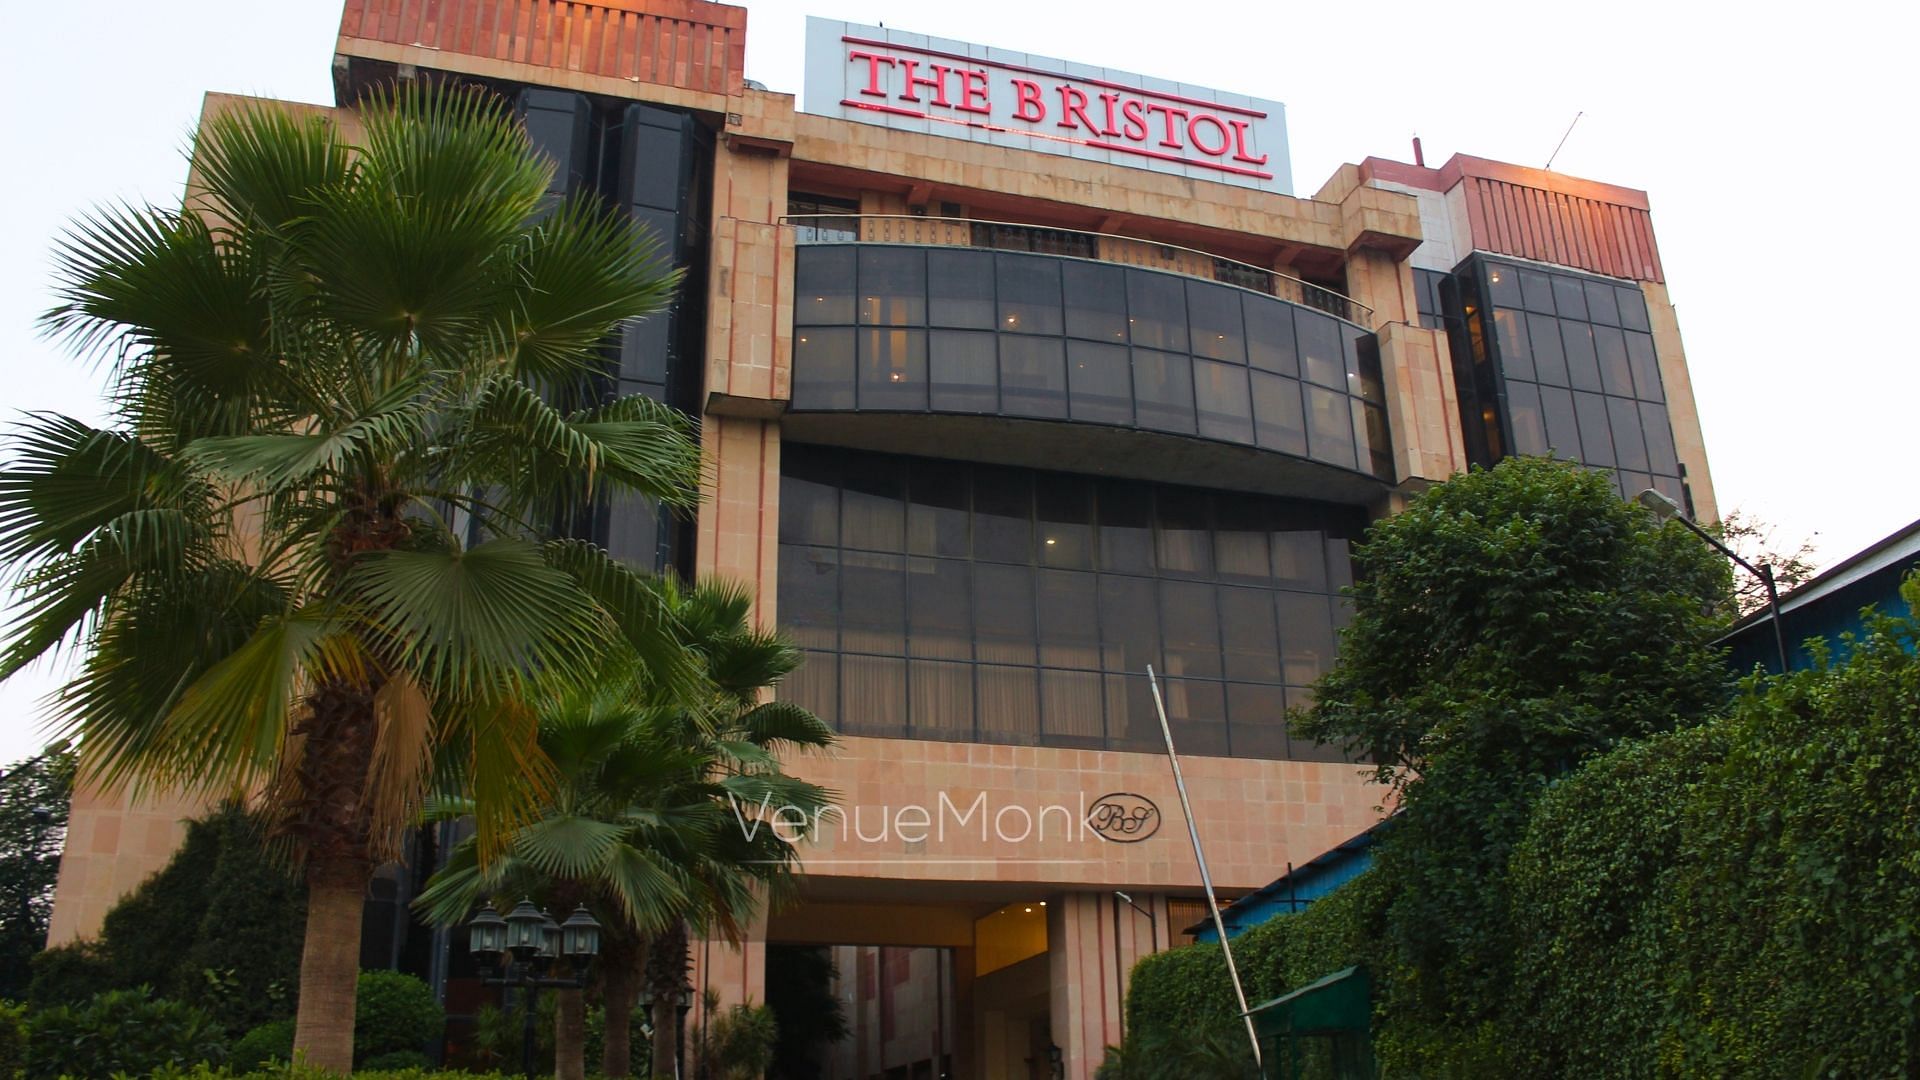 The Bristol Hotel in MG Road, Gurgaon